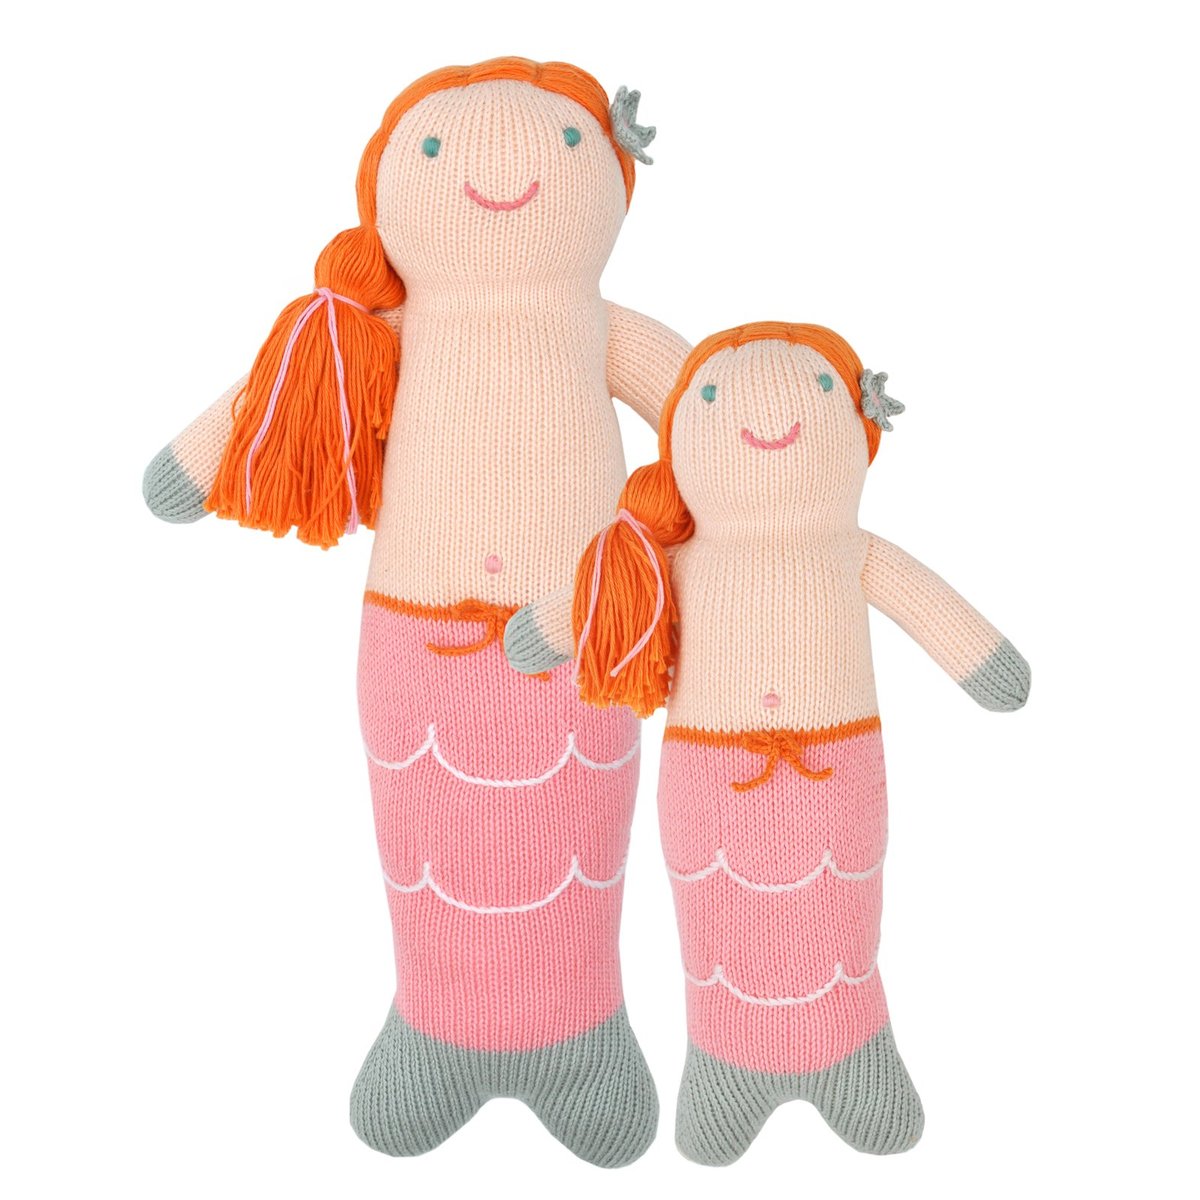 Blabla Knit Doll, Melody the Mermaid - Regular Size - oh baby!